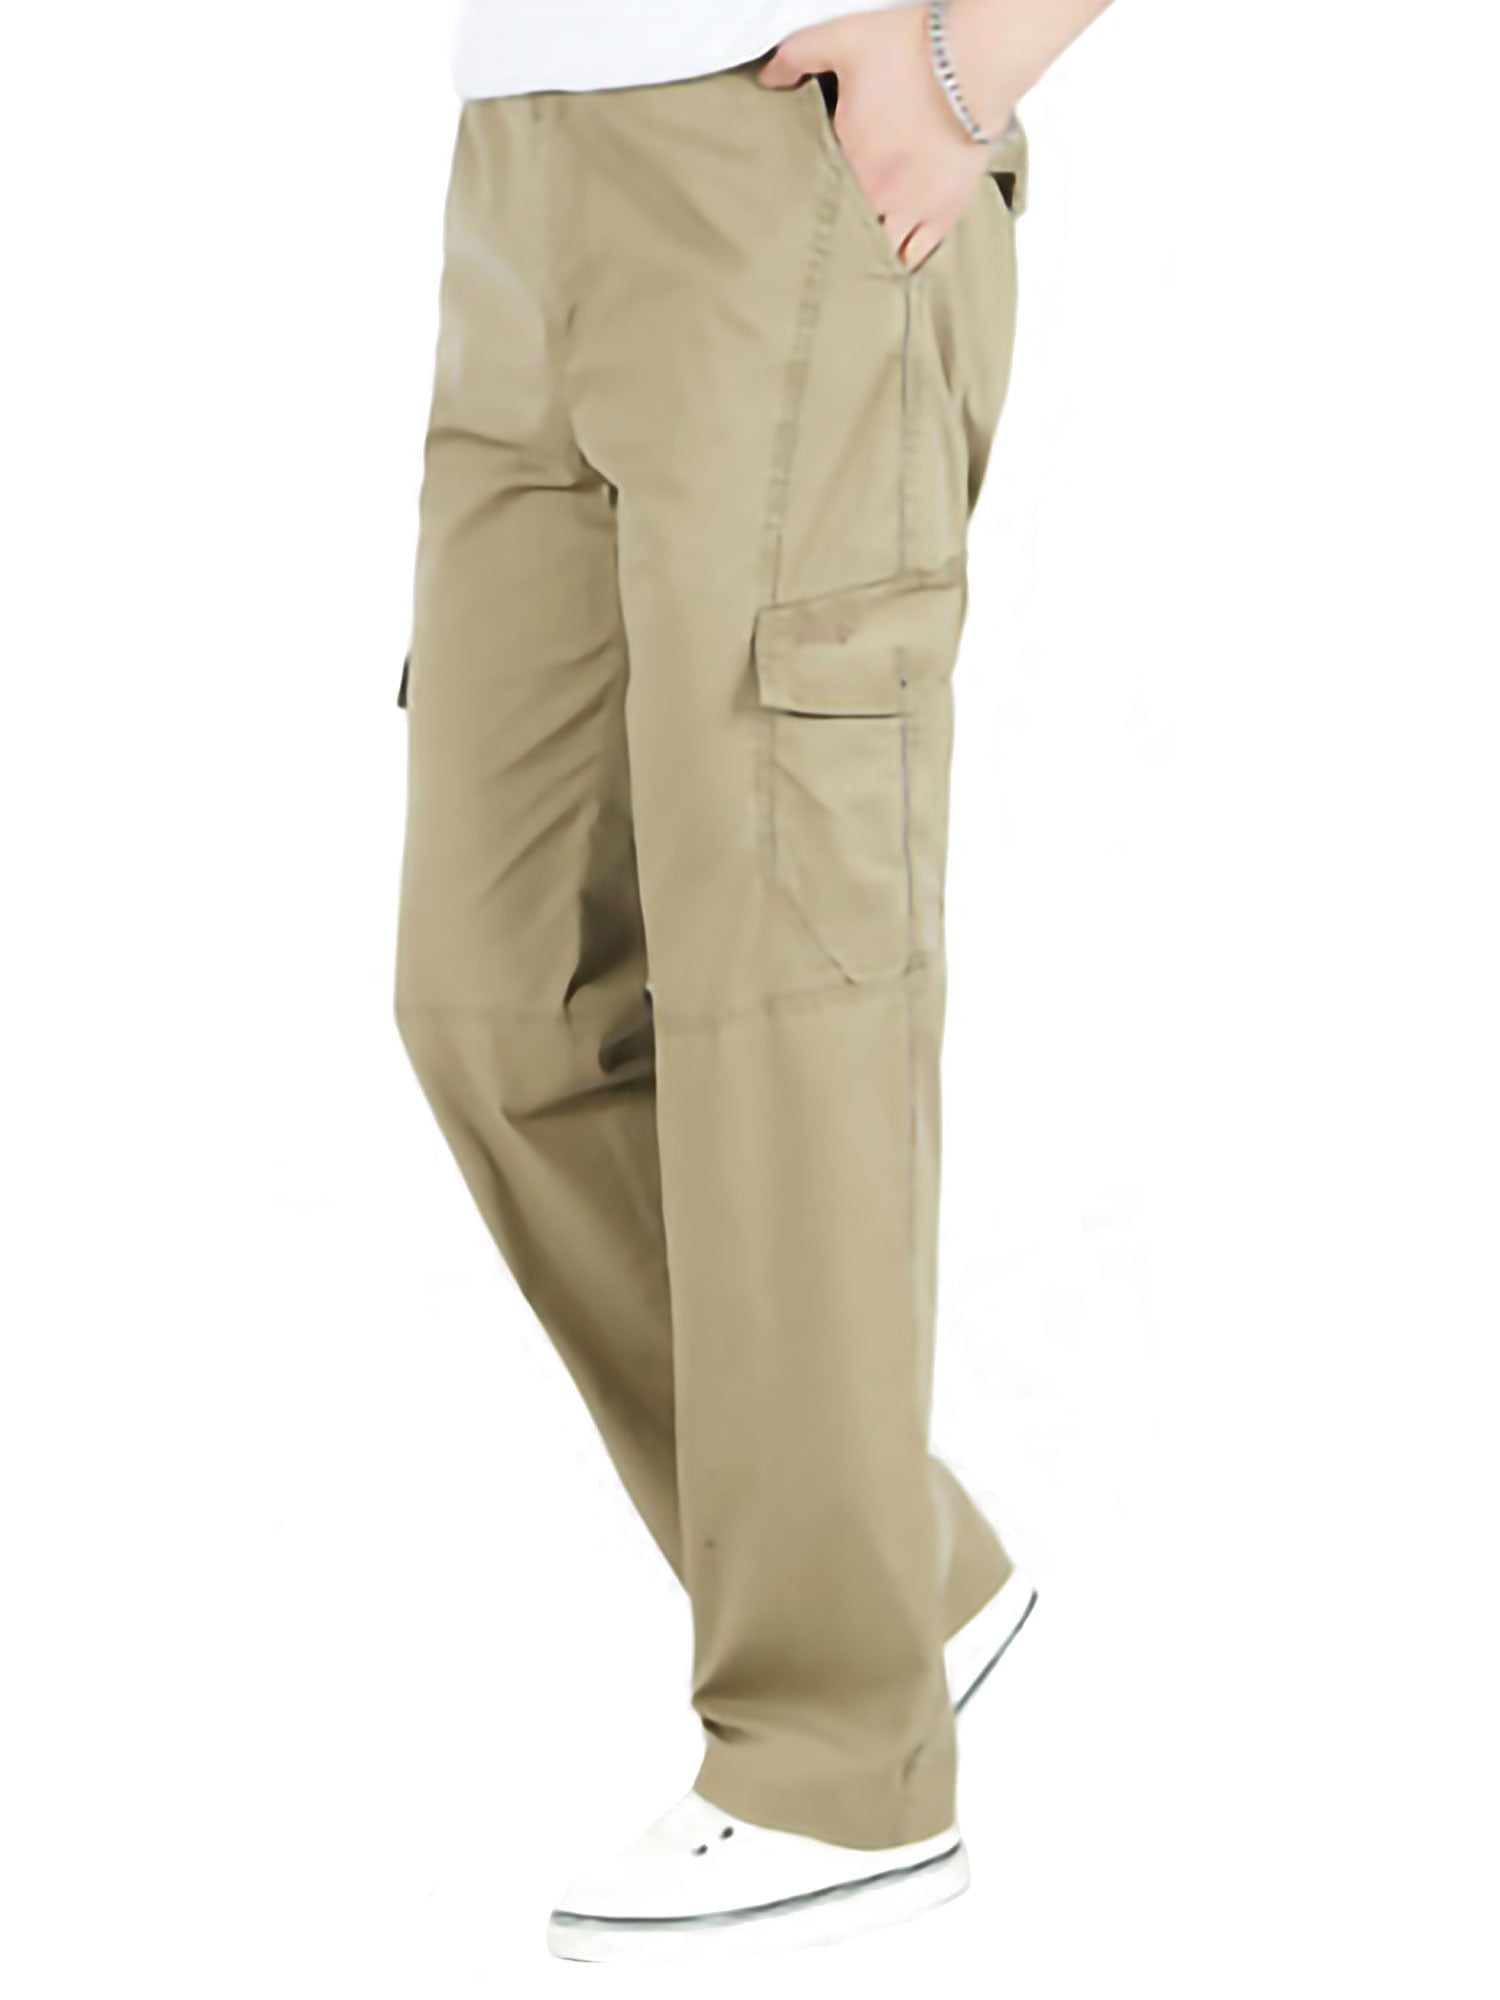 SELX Men Drawstring Athletic Casual Close Bottom Multi Pocket Straight Fit Pants